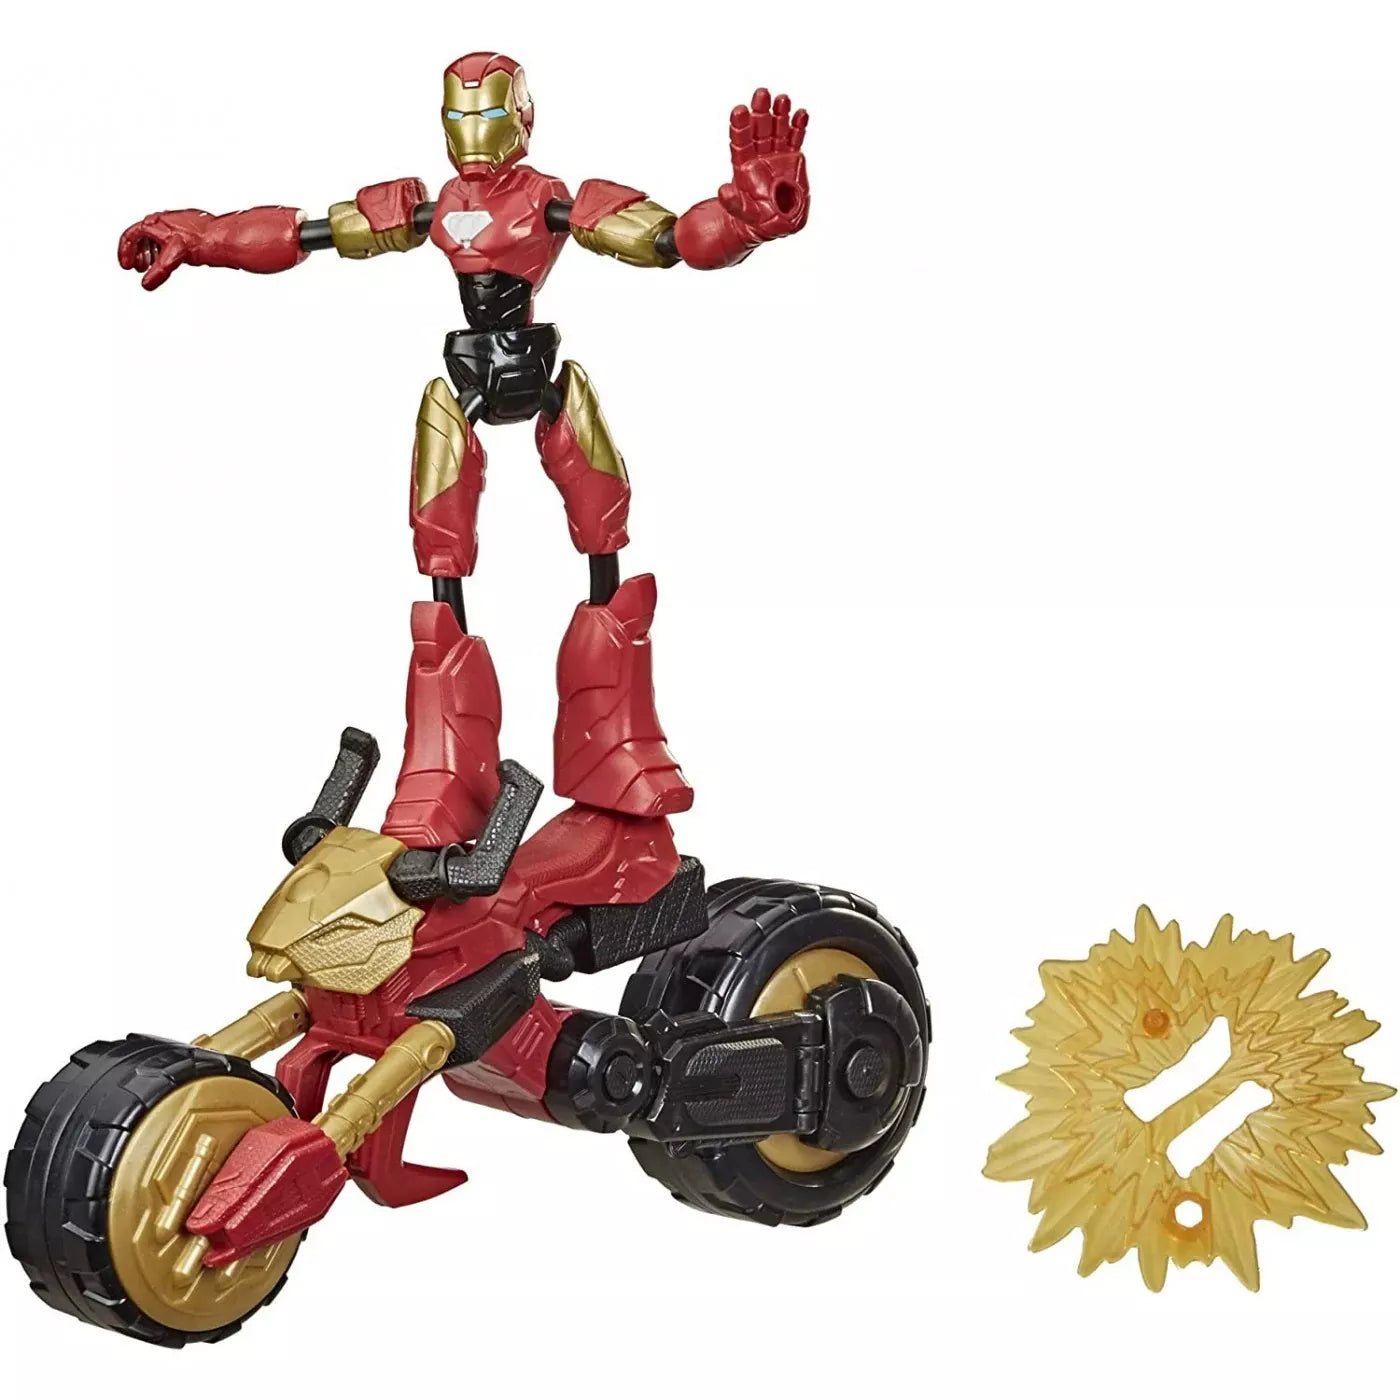 Marvel Avengers Bend and Flex Iron Man Action Figure by Hasbro -Hasbro - India - www.superherotoystore.com